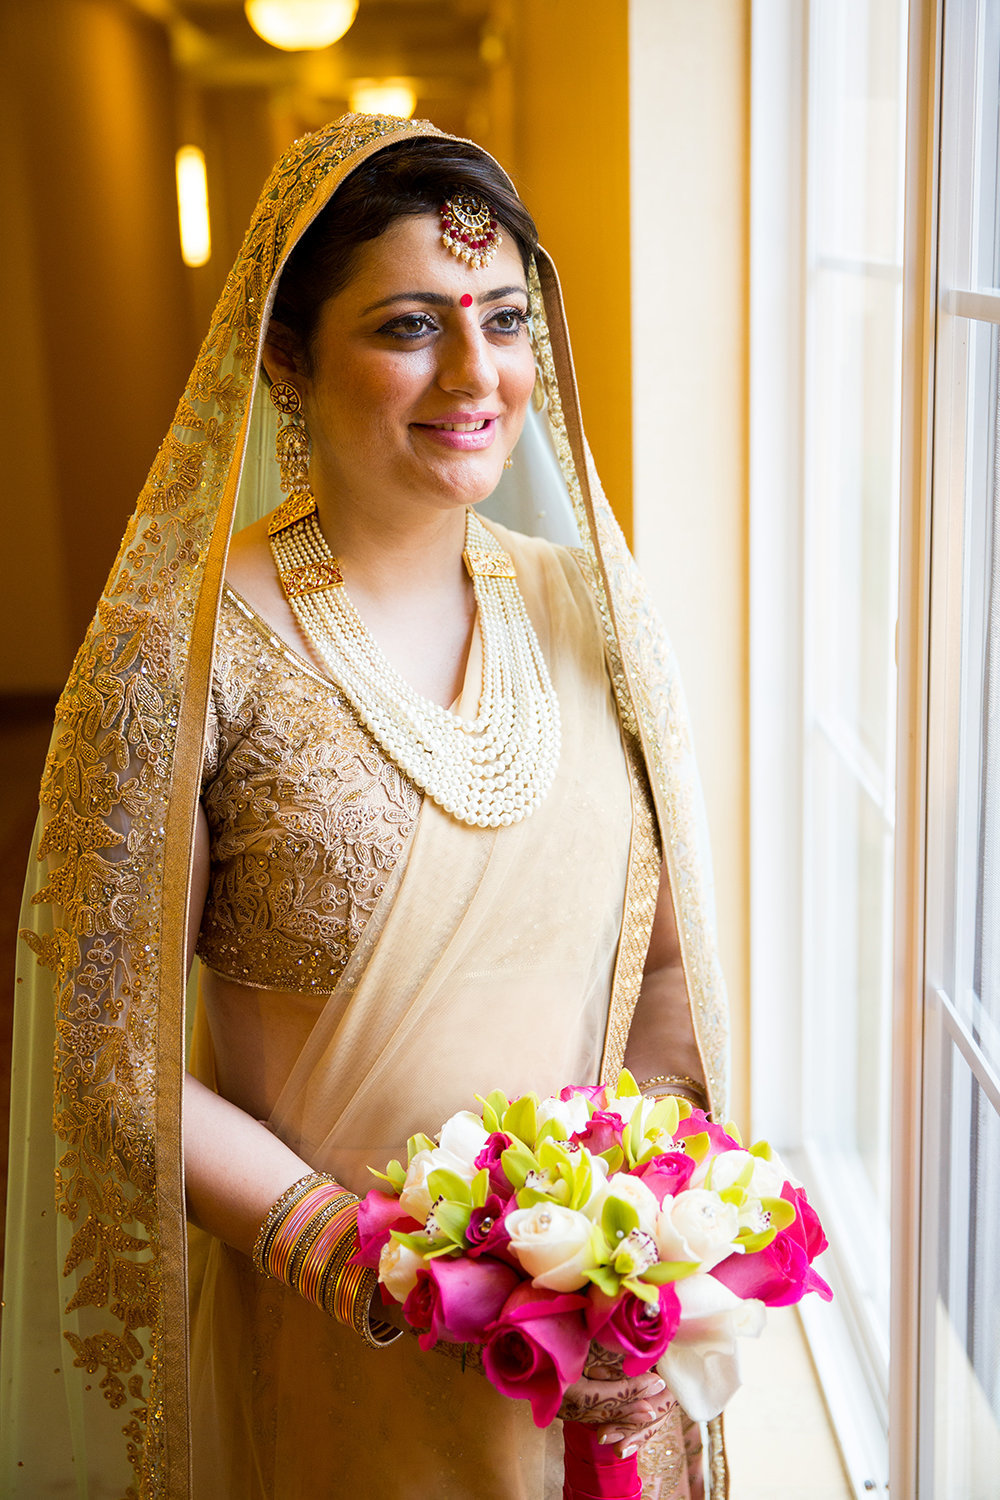 Bridal Portrait of Hindu Bride in Gold Sari